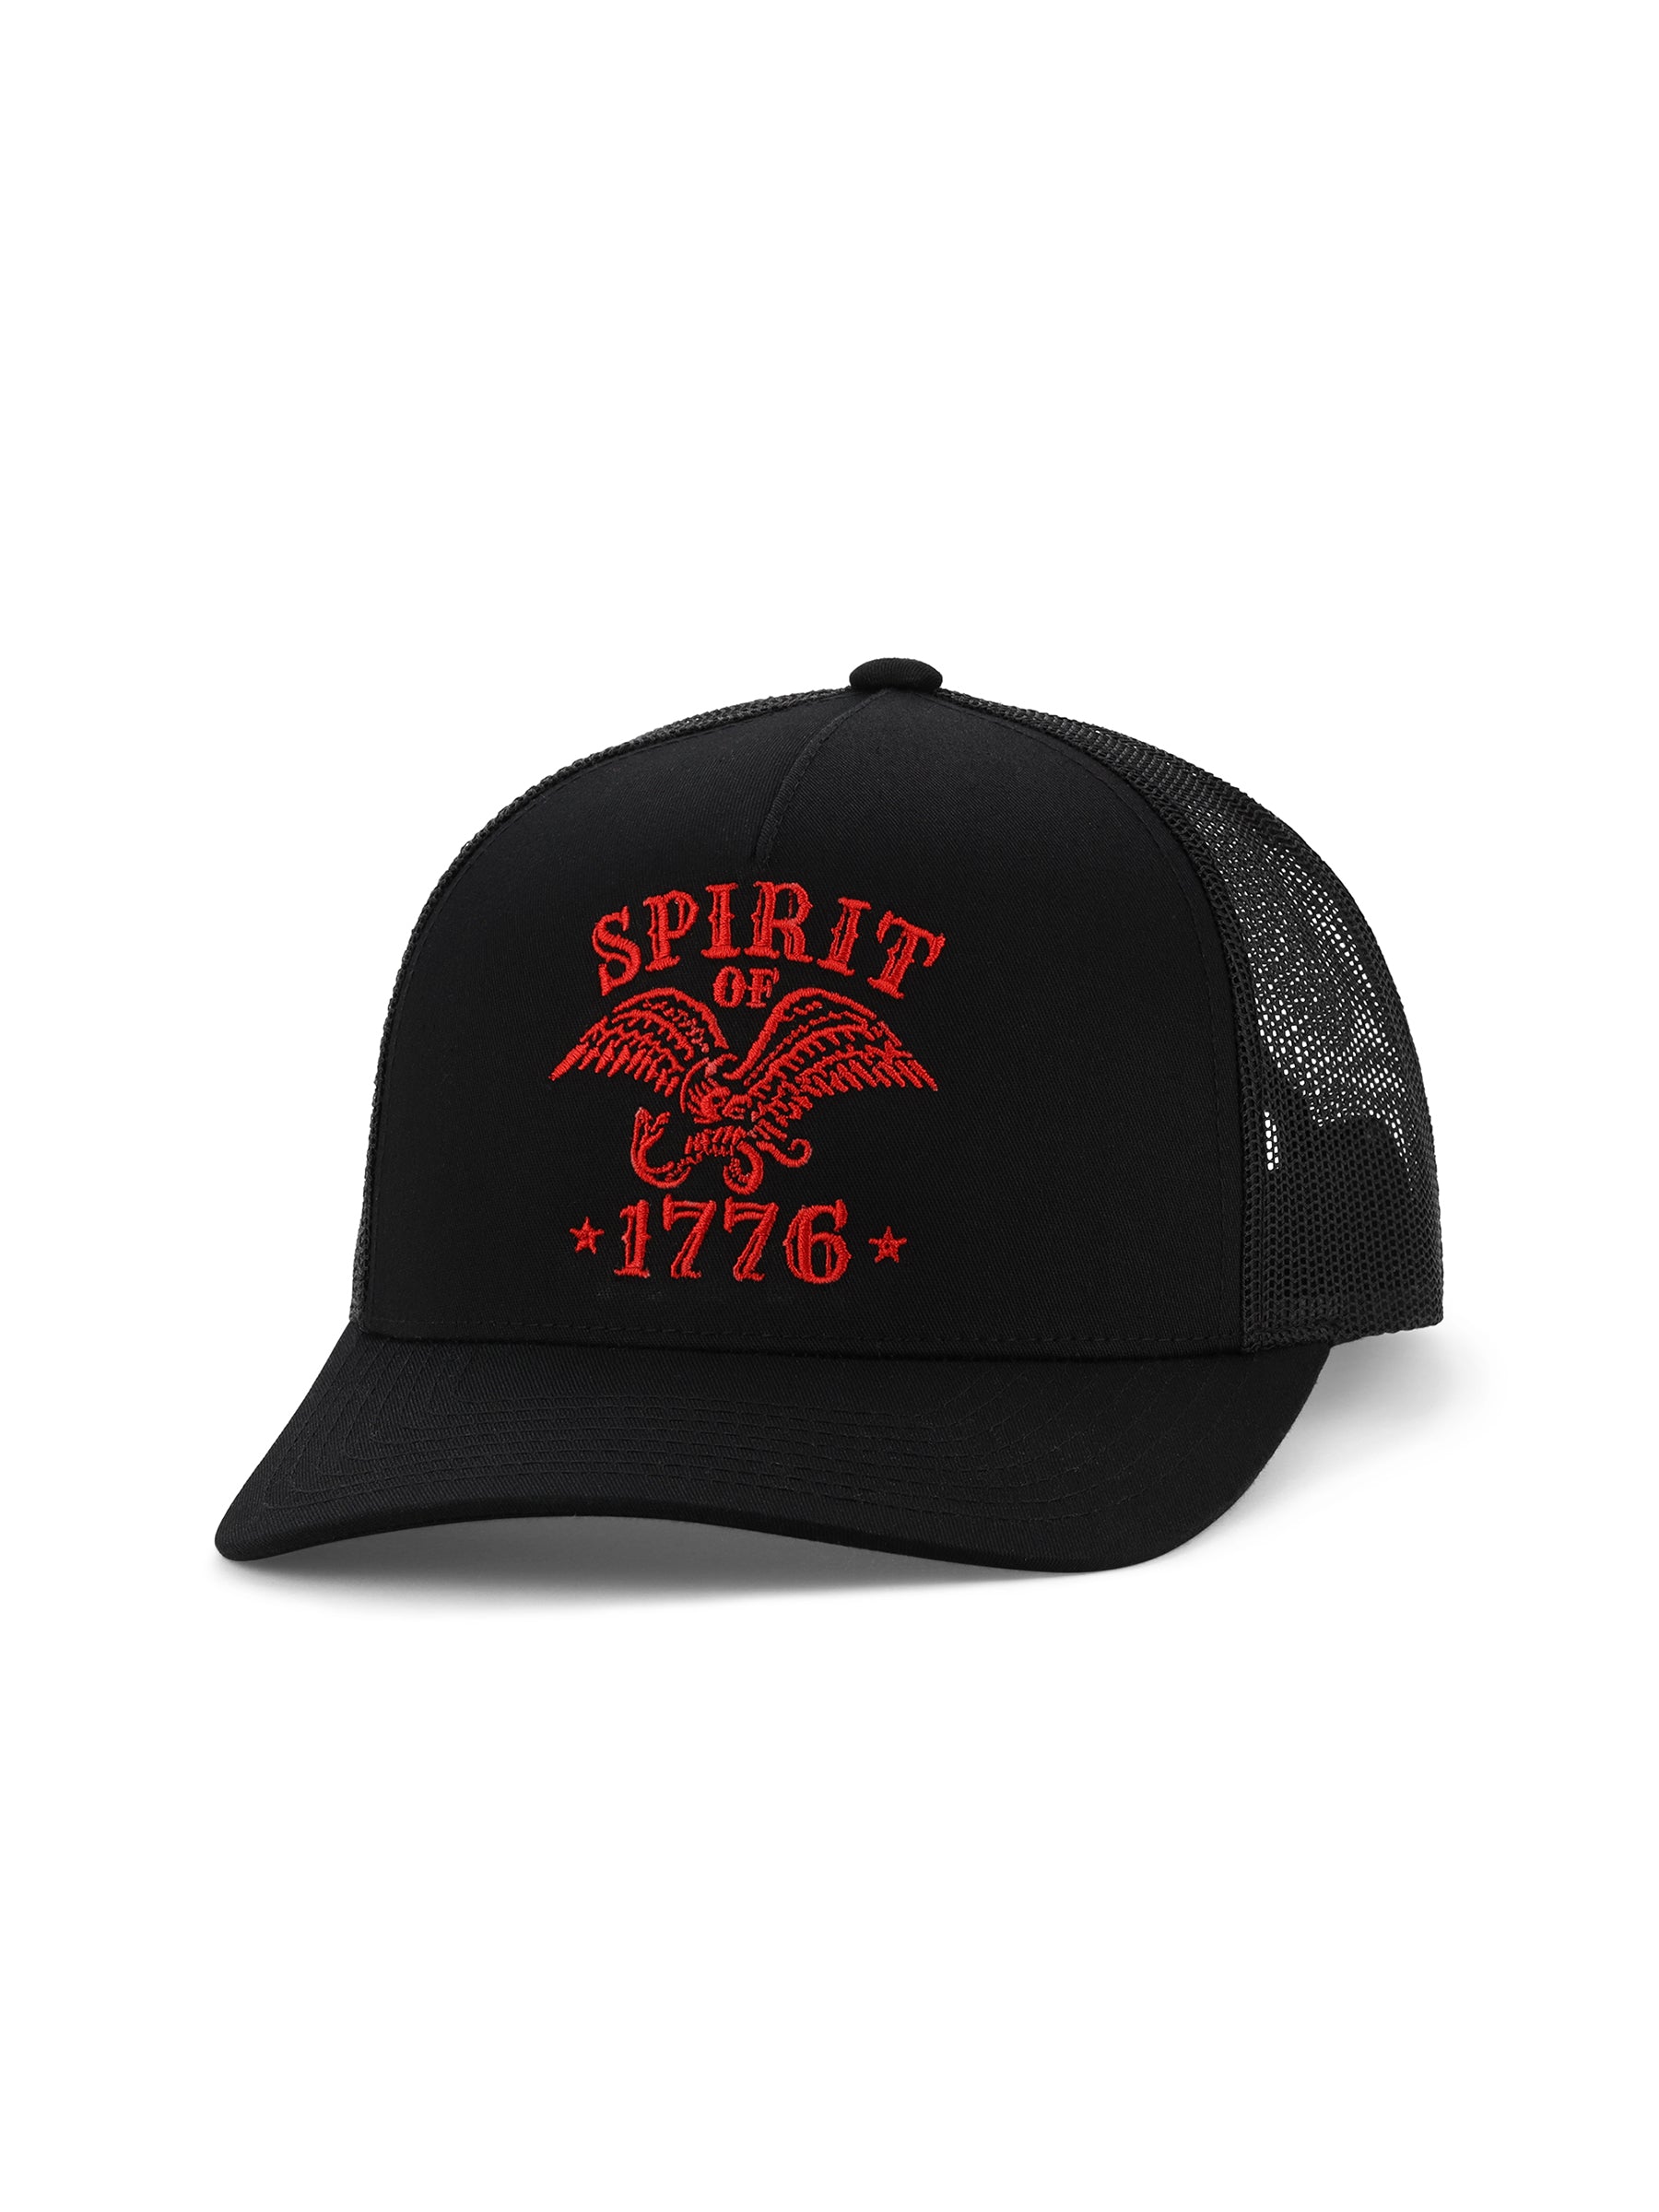 Spirit of 1776 hat